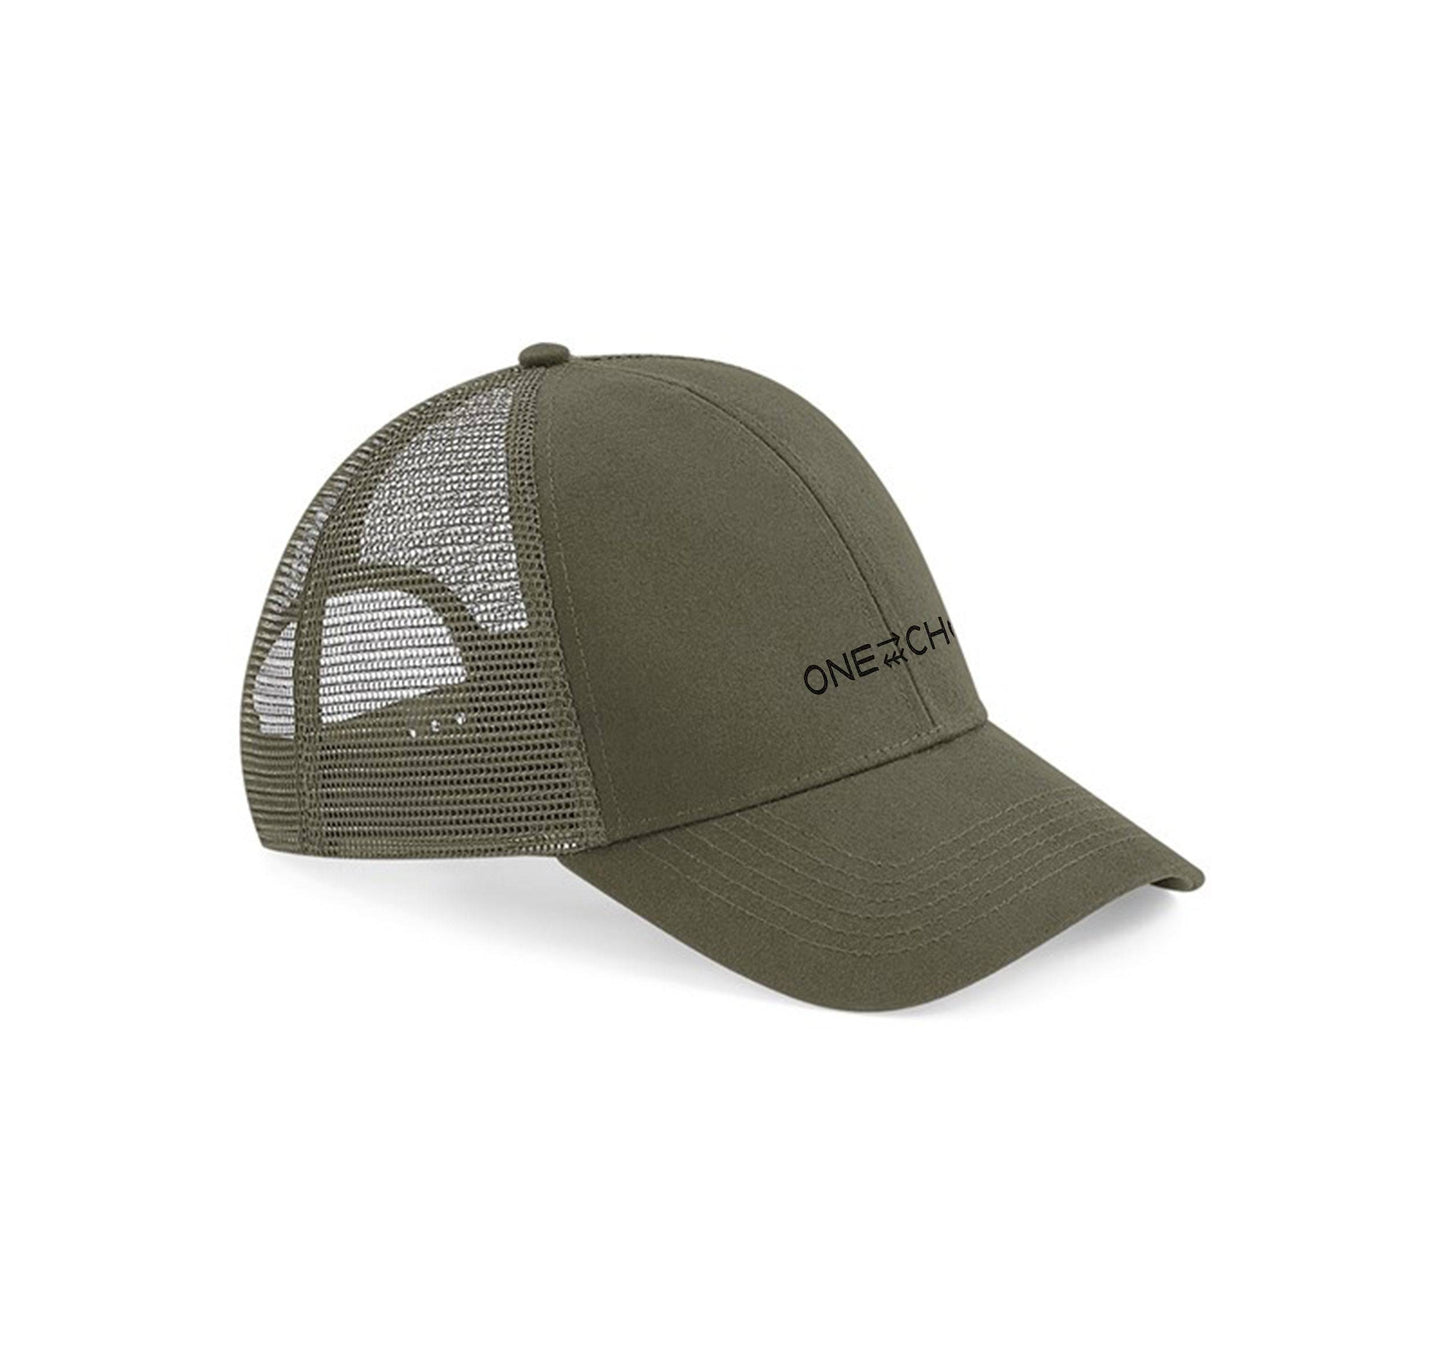 Organic Trucker Hat - Khaki - One Choice Apparel